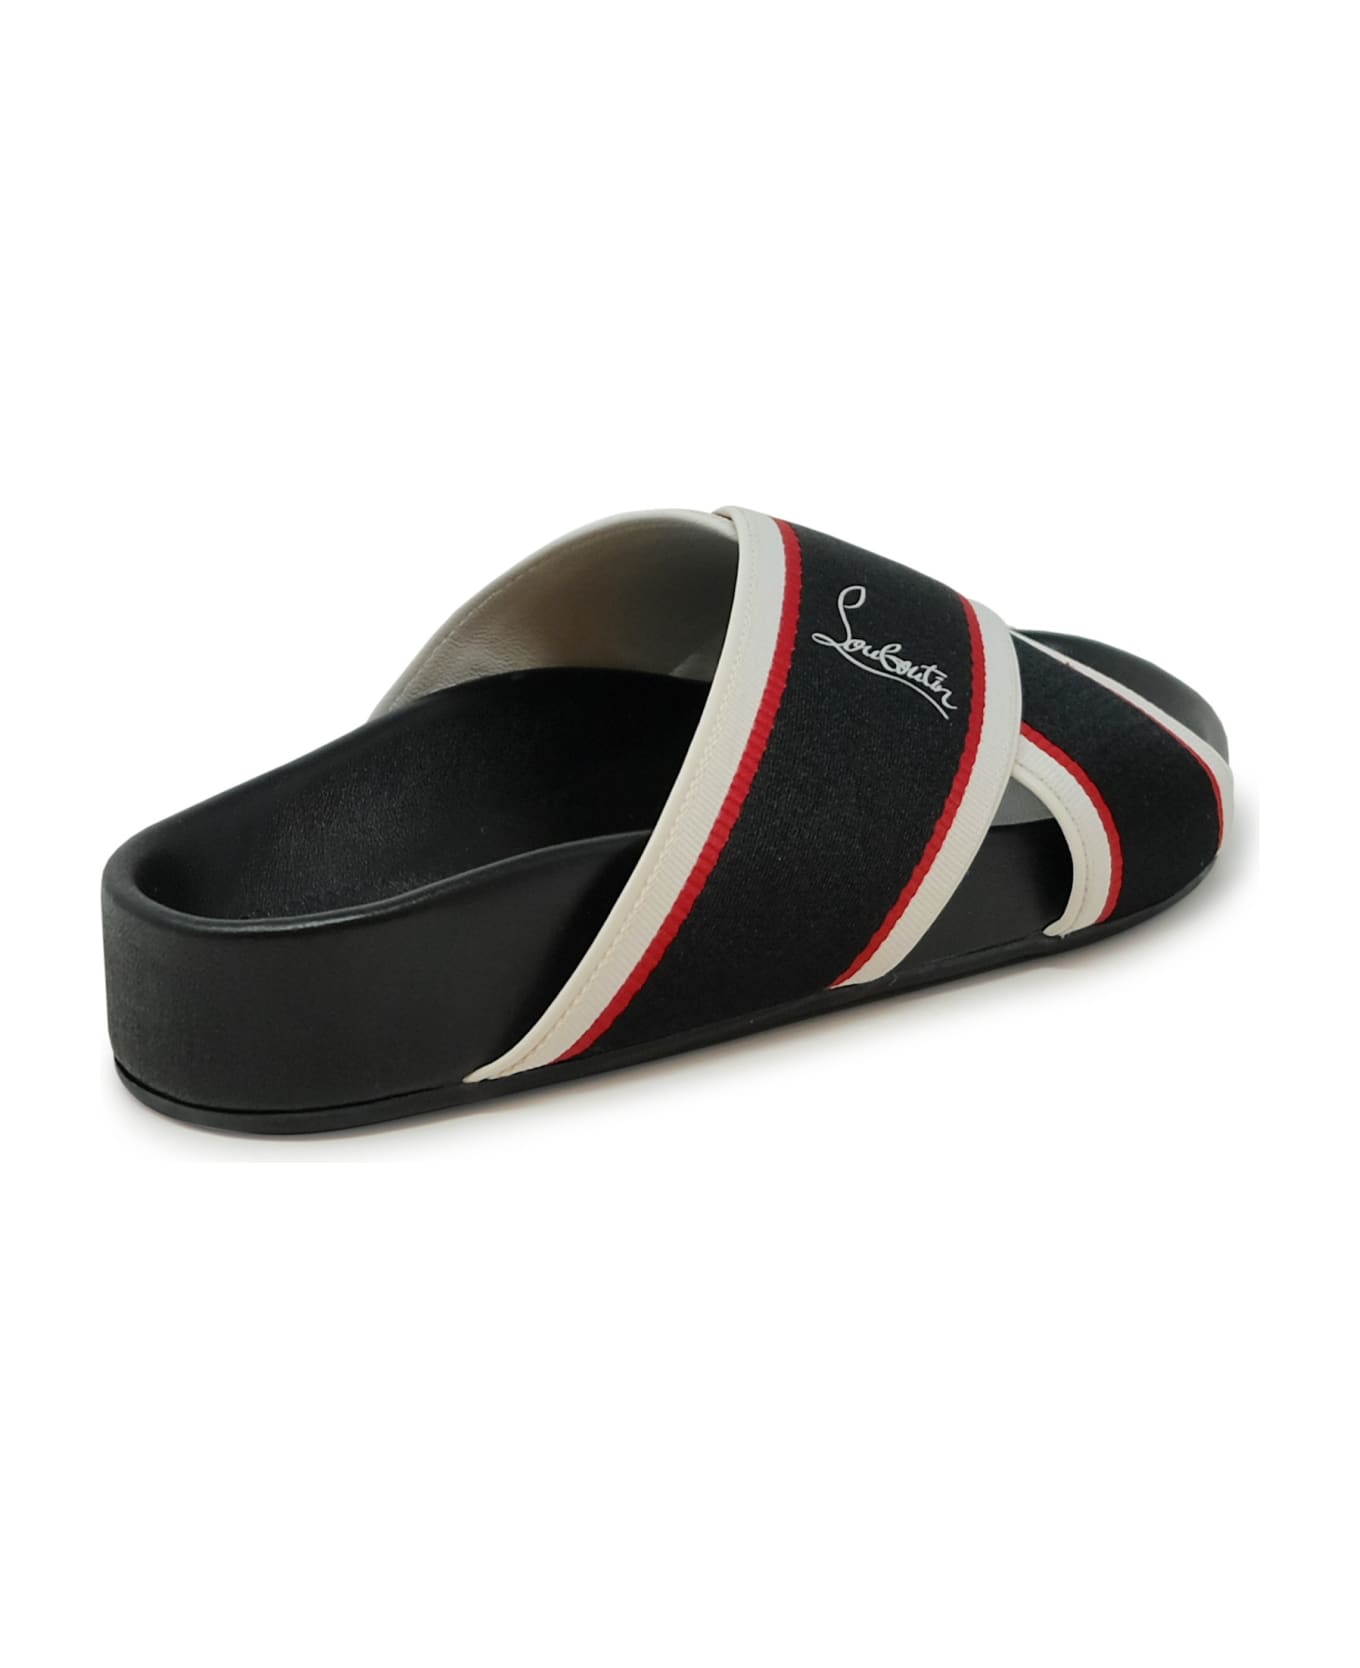 Christian Louboutin Hot Cross Bizz Sandals - Black